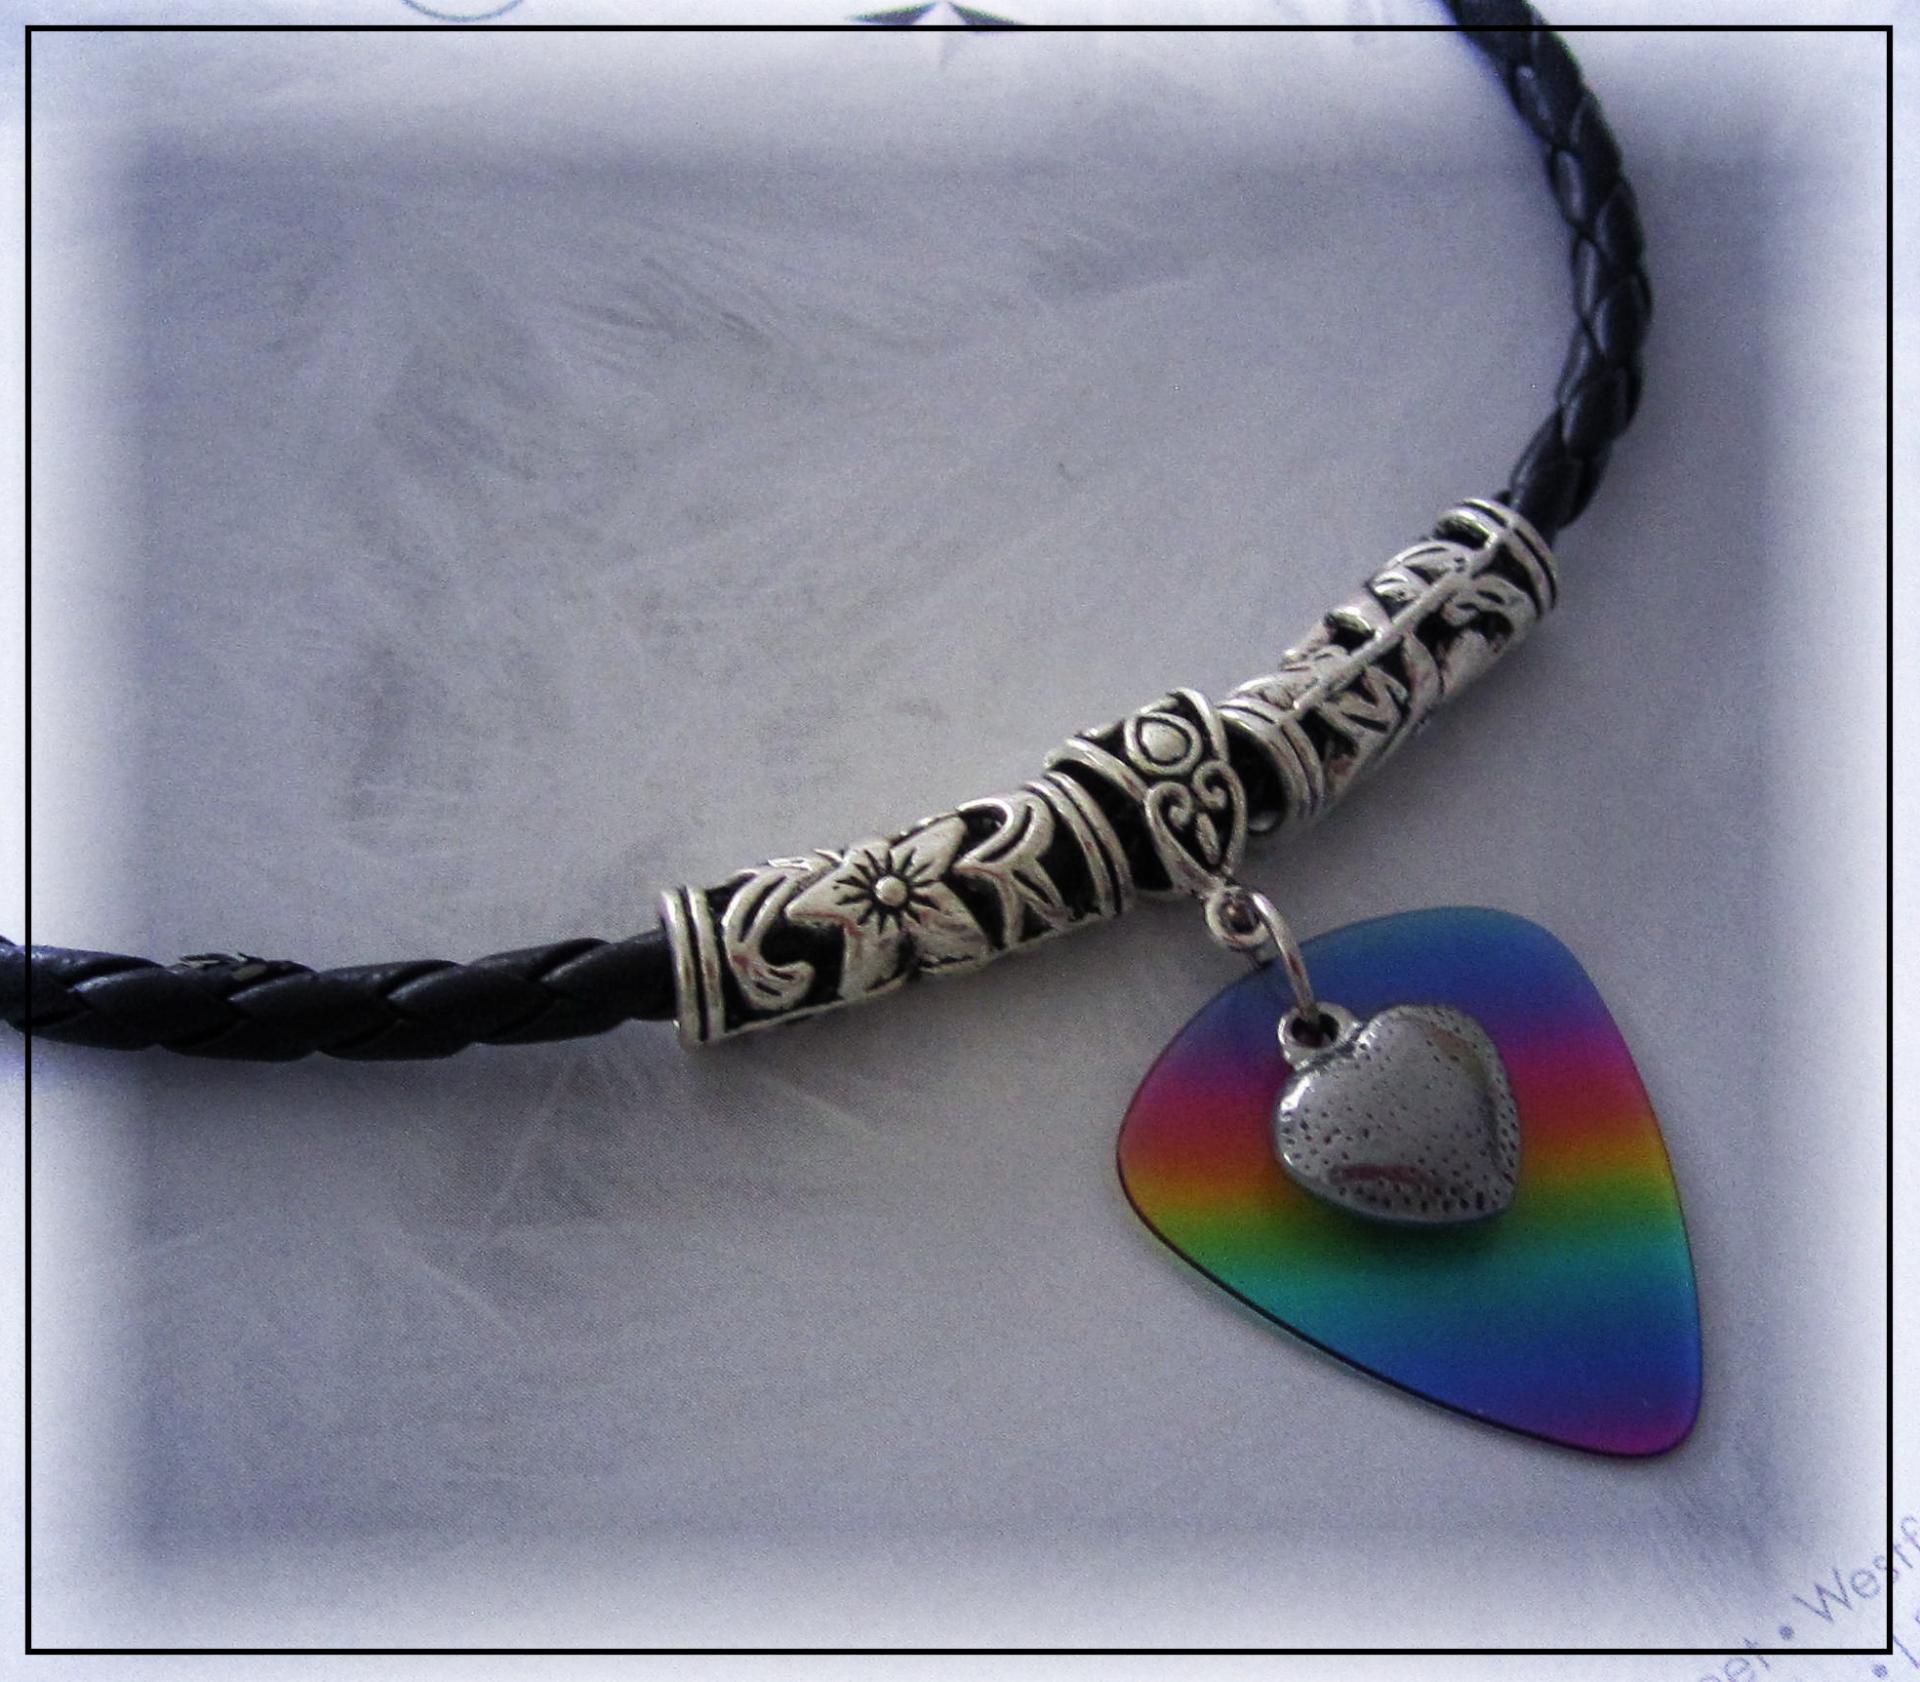 Love Heart On Guitar Pick Choker Necklace